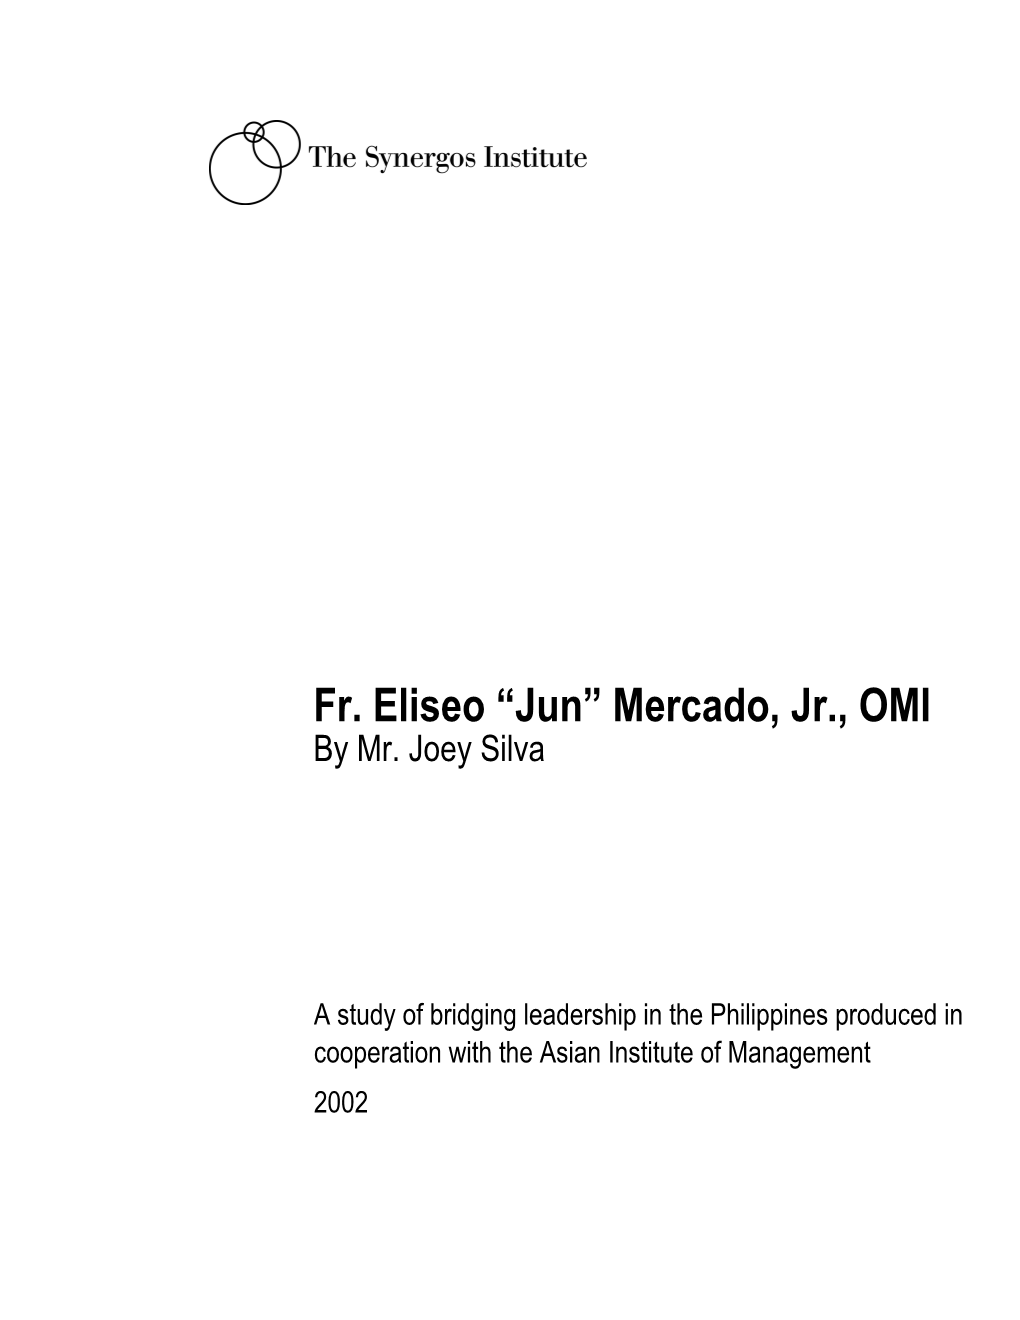 Fr. Eliseo “Jun” Mercado, Jr., OMI by Mr